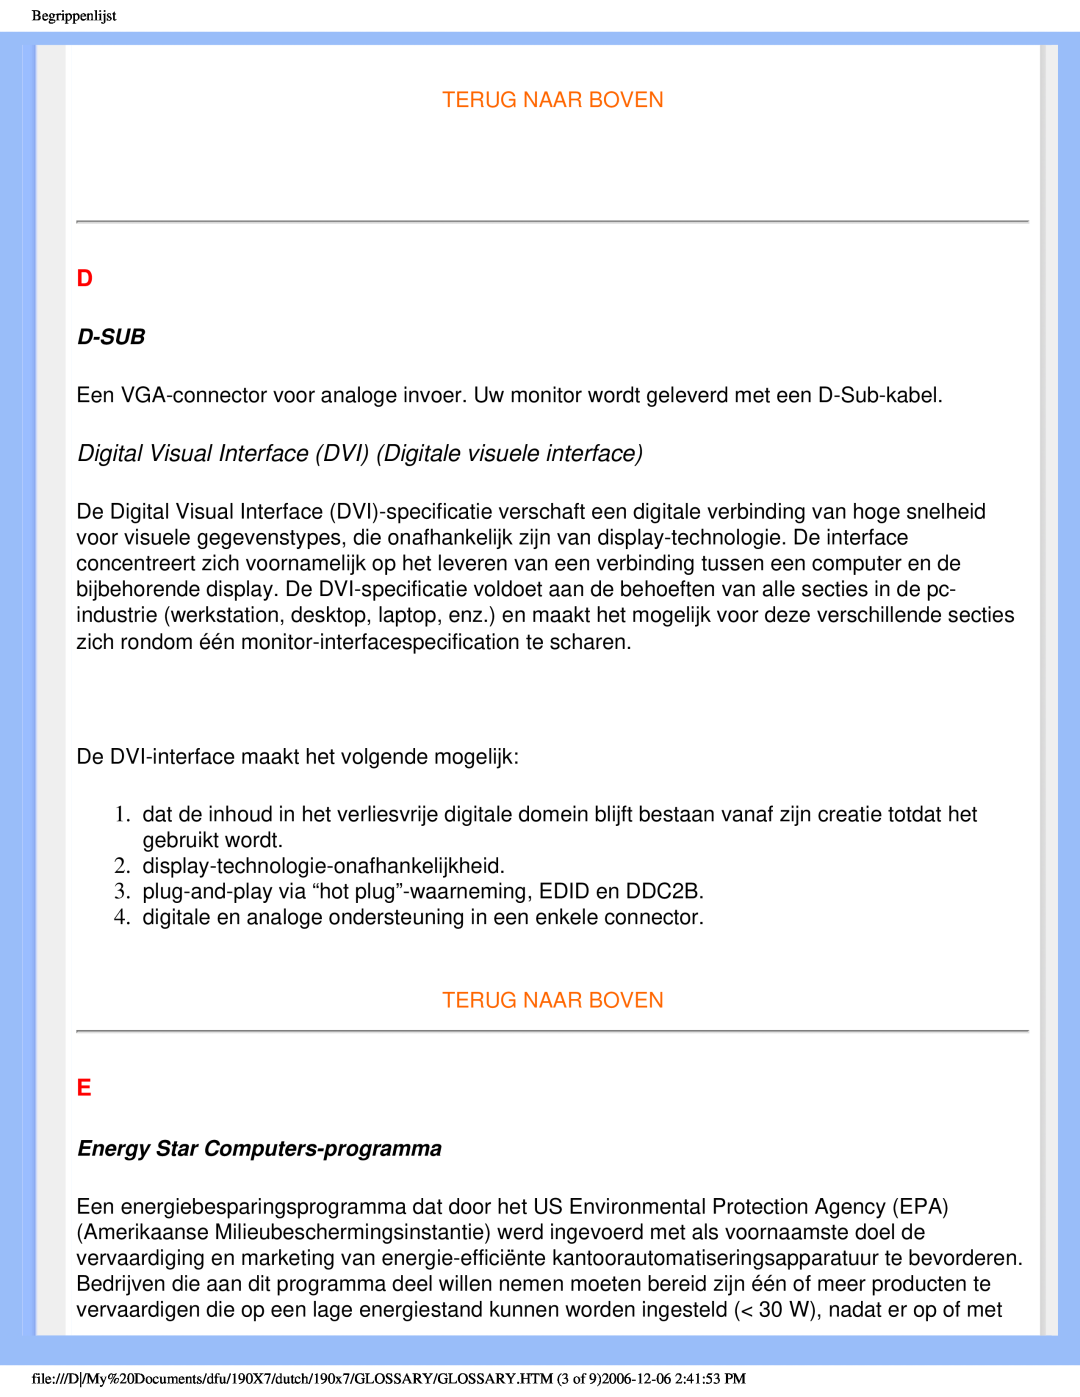 Philips 190X7 user manual Terug Naar Boven, D-Sub, Energy Star Computers-programma 